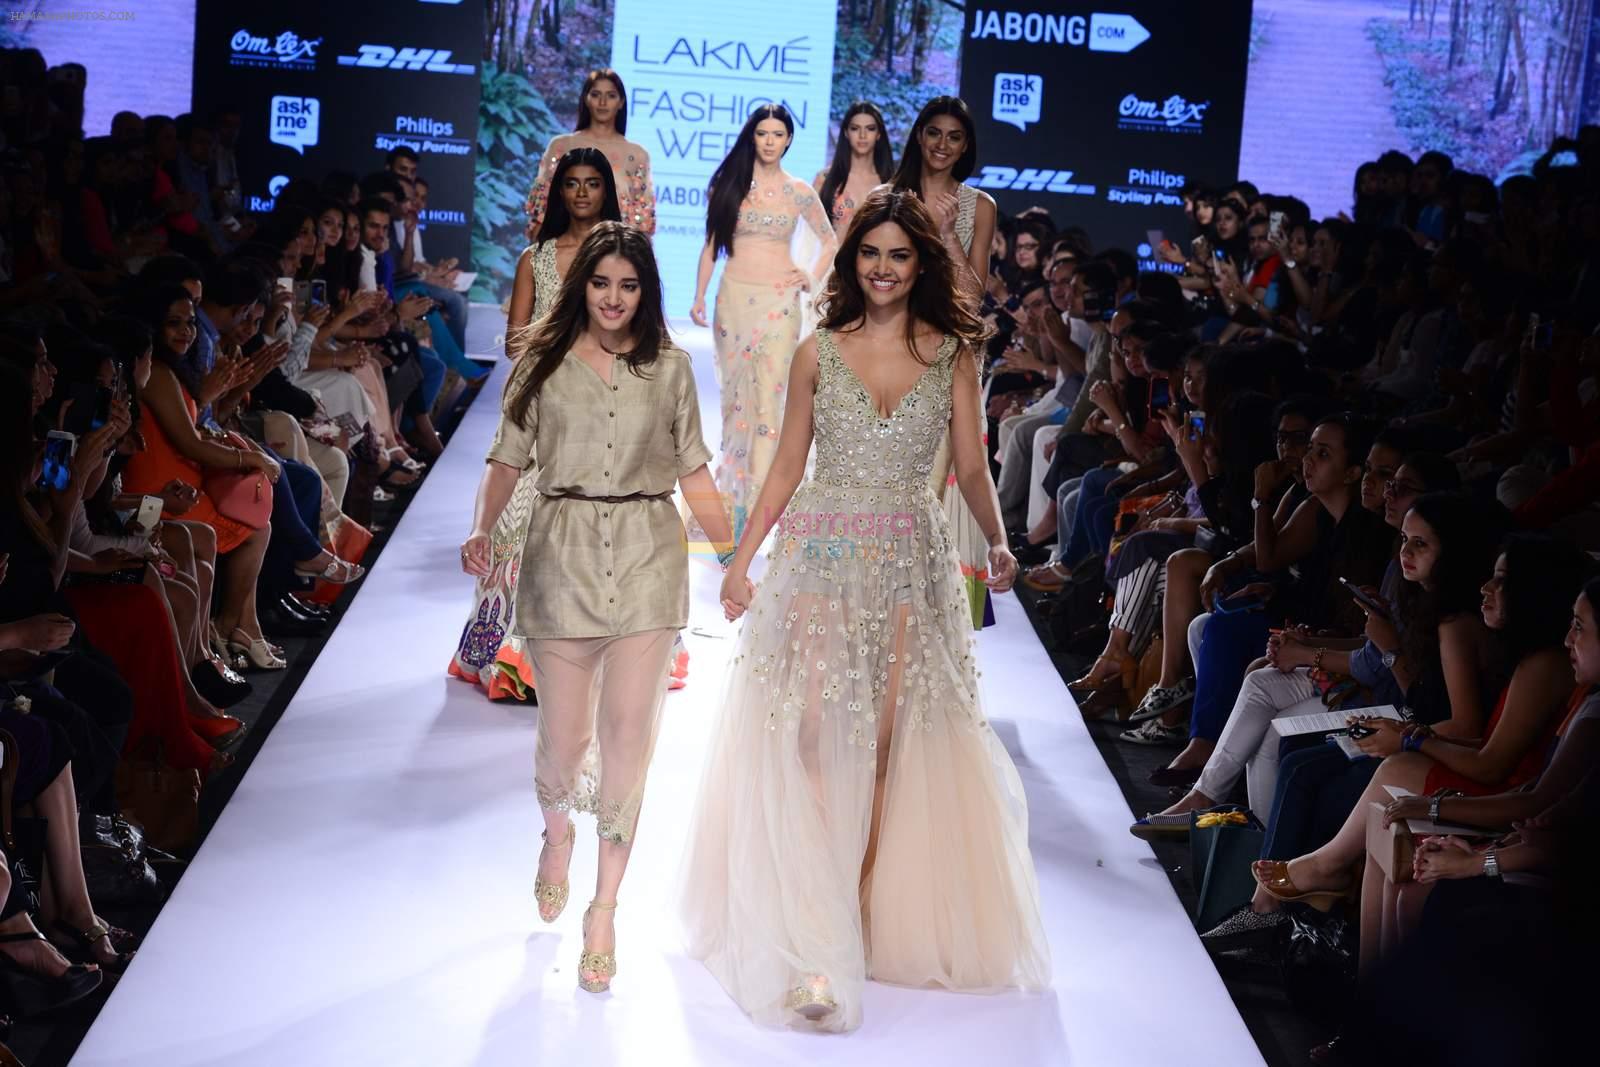 Esha Gupta walk the ramp for Arpita Mehta Show at Lakme Fashion Week 2015 Day 4 on 21st March 2015